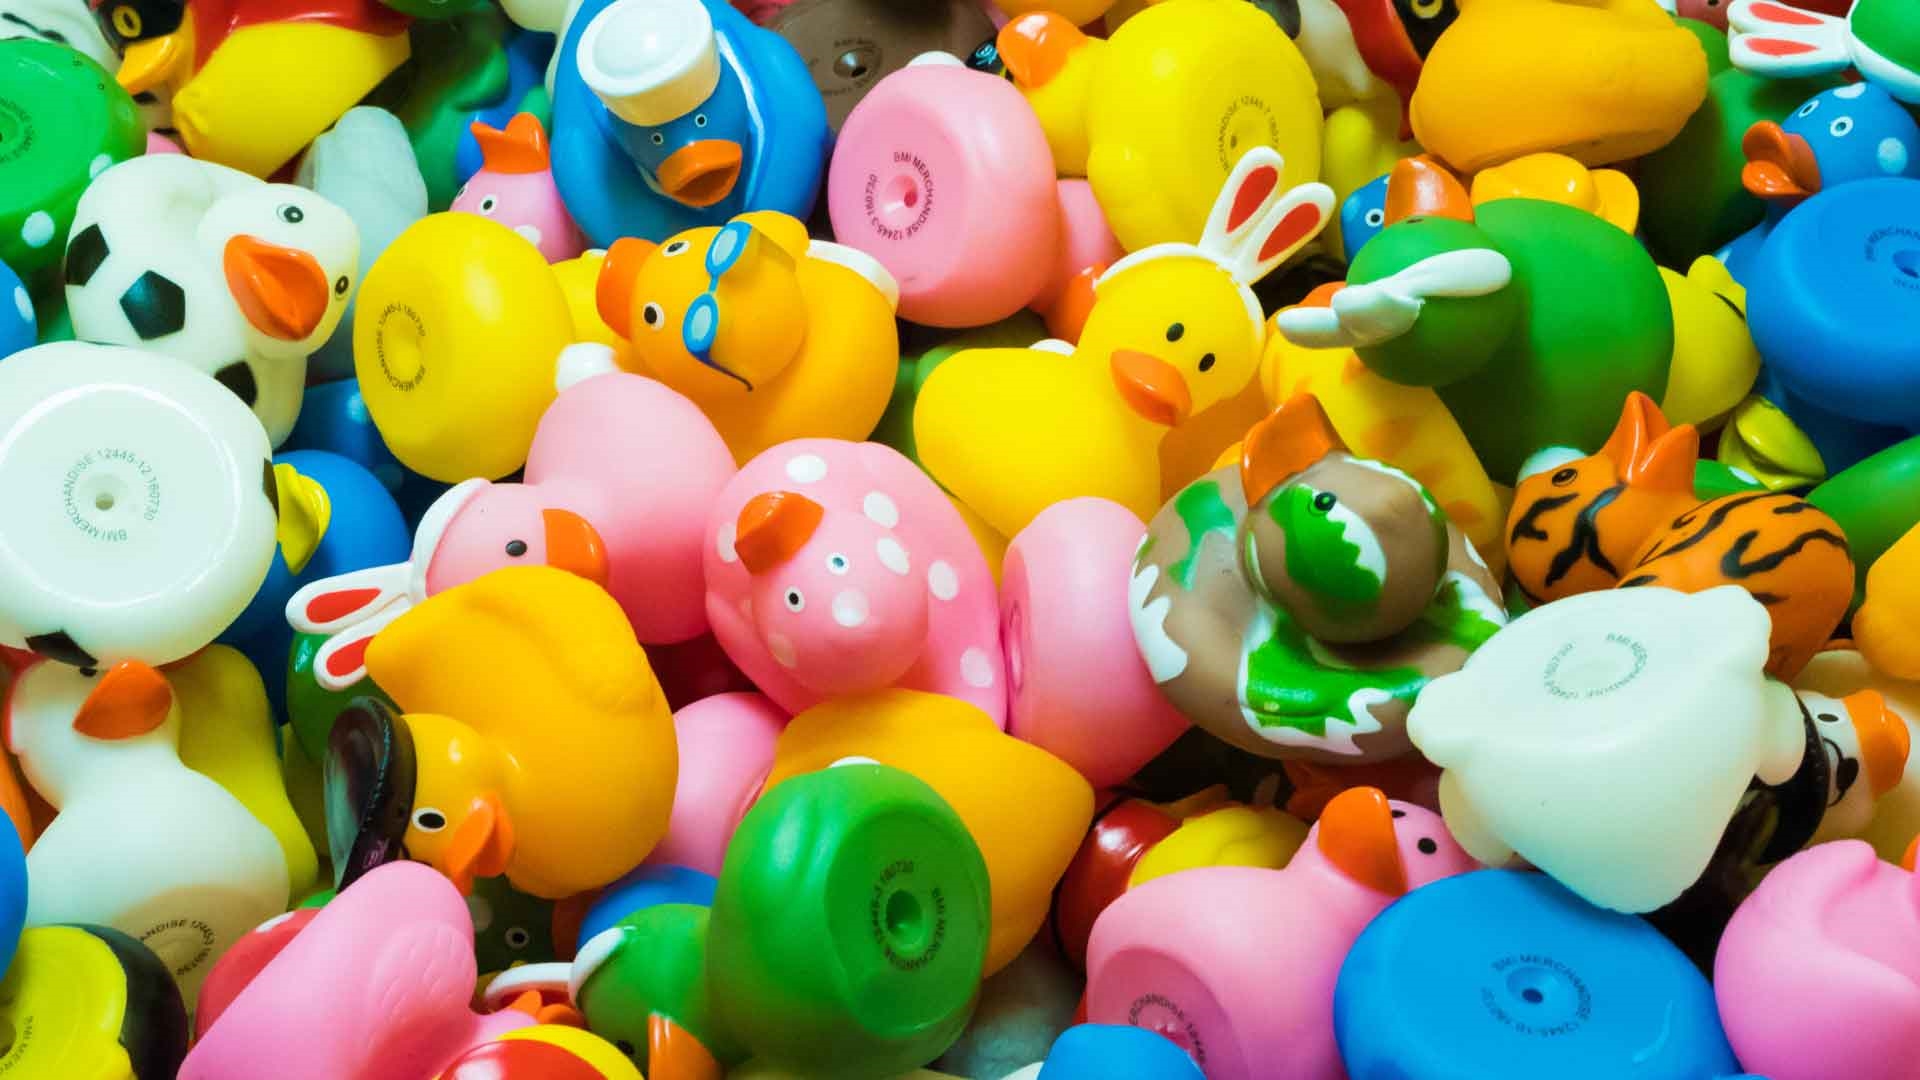 Assorted rubber ducks